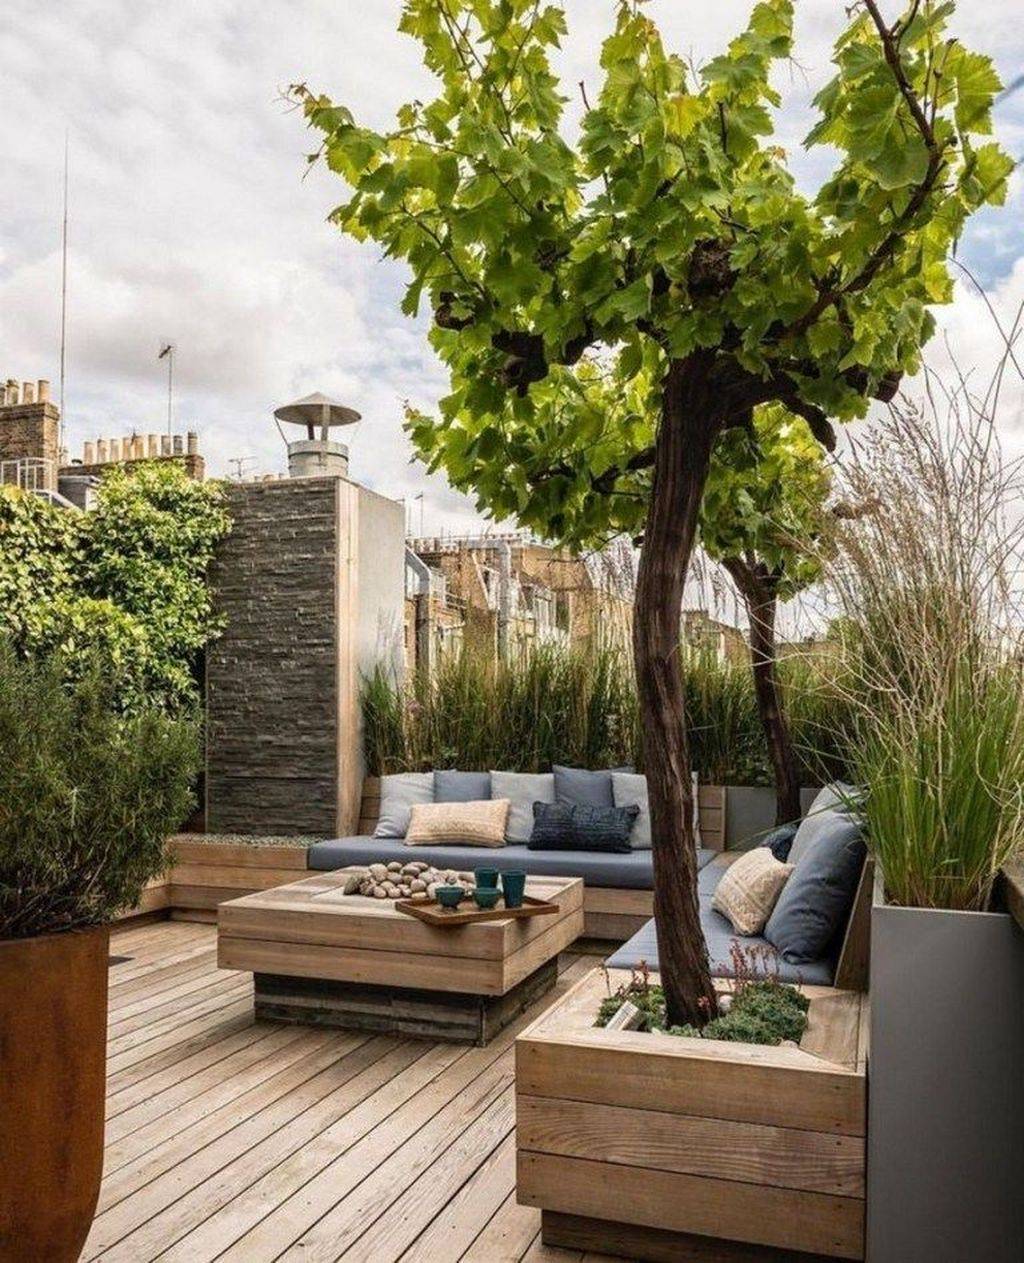 London Small Roof Garden Ideas